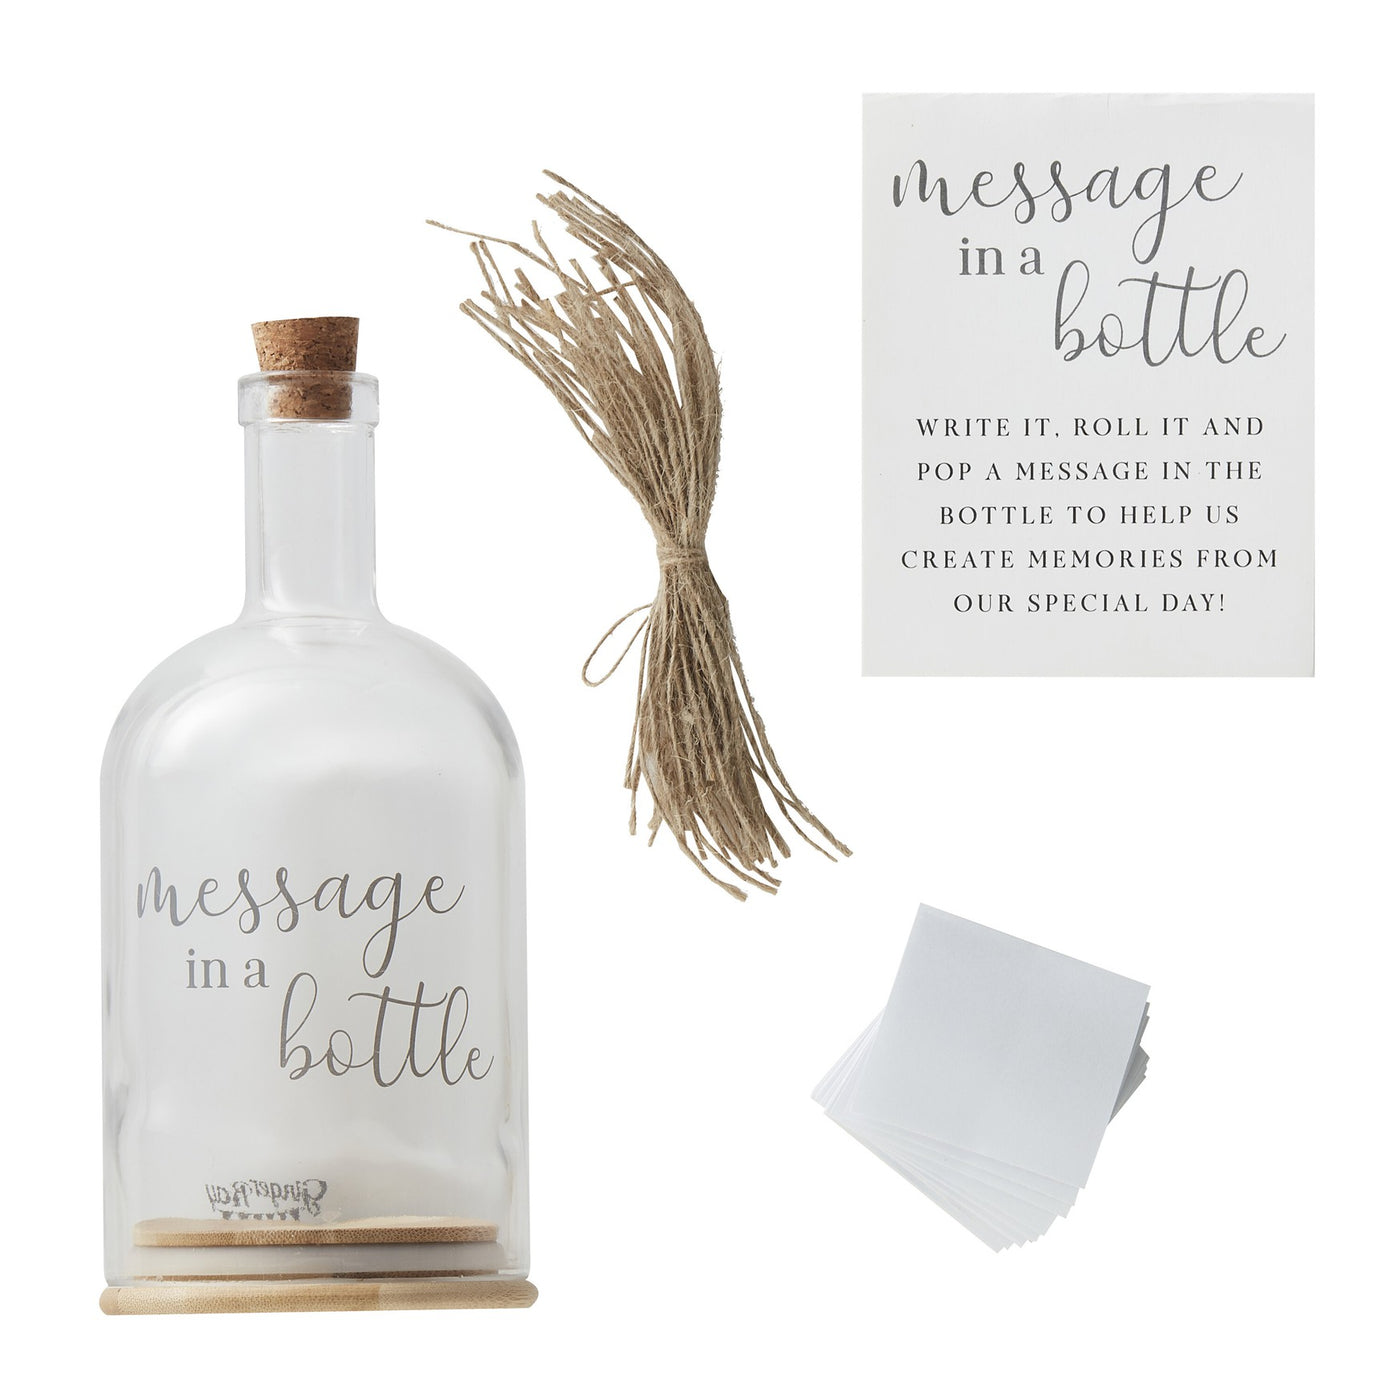 Alternative Guest Book Idea - Message in a bottle 